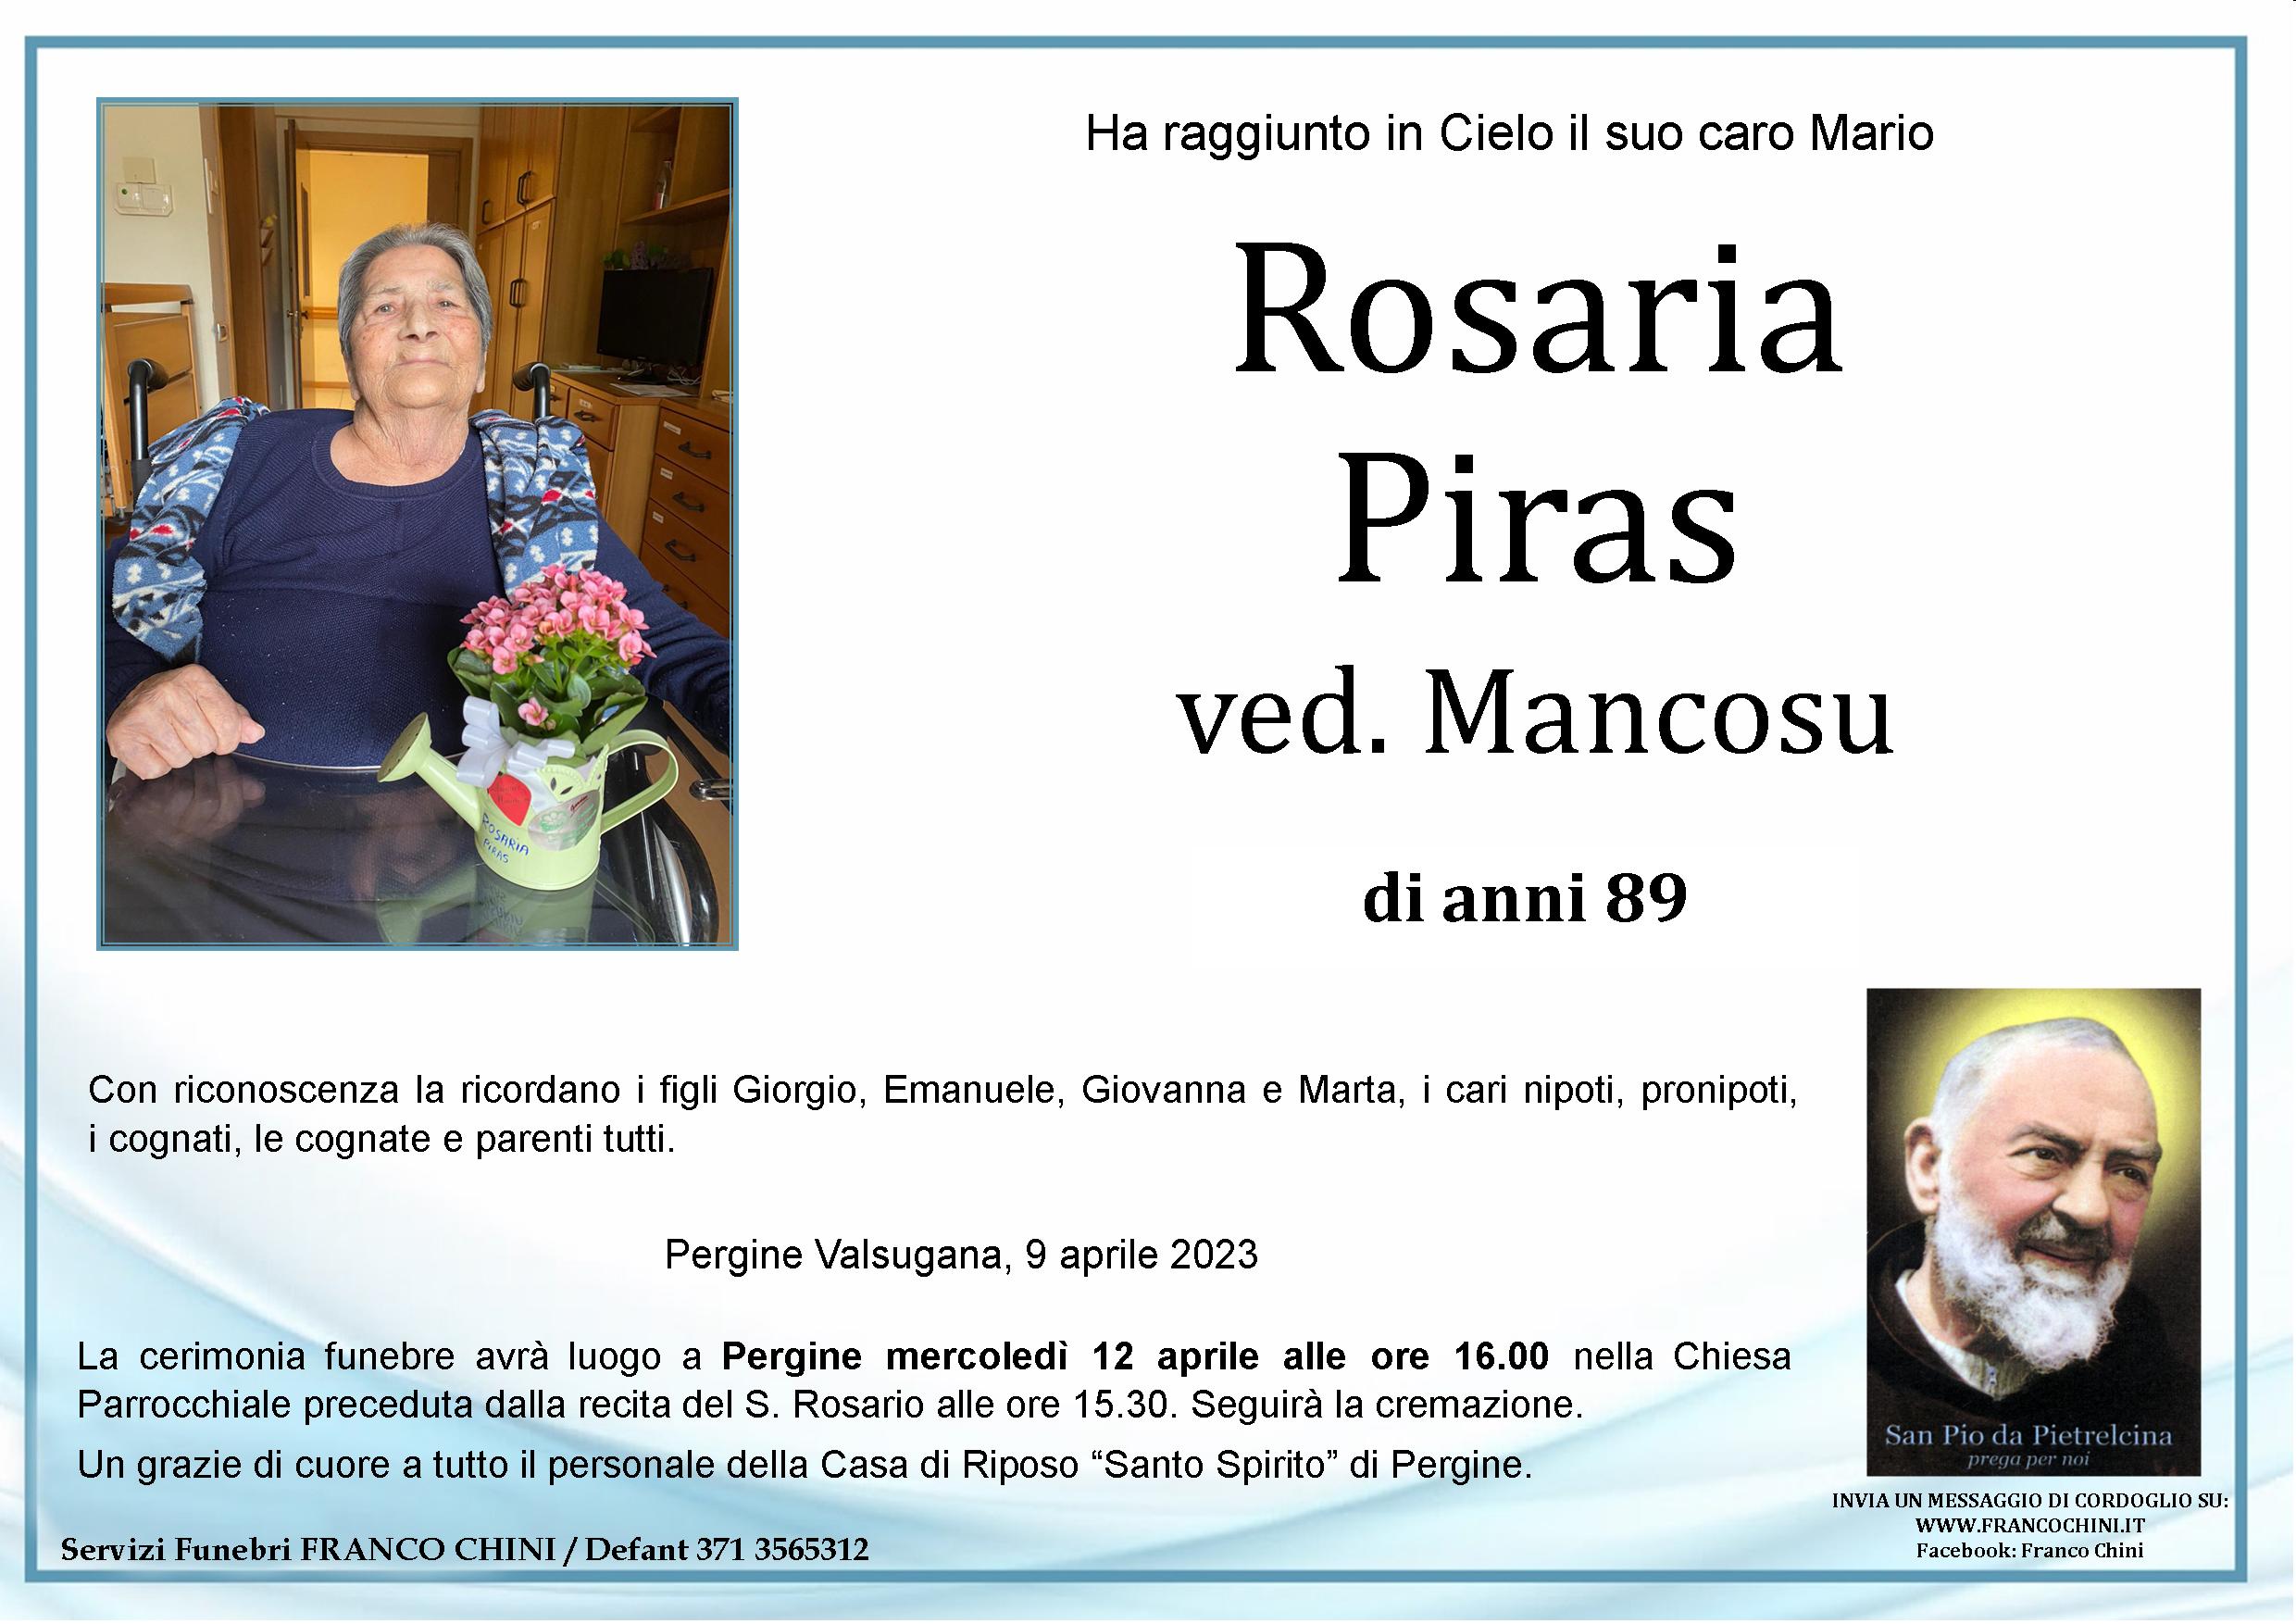 Rosanna Piras